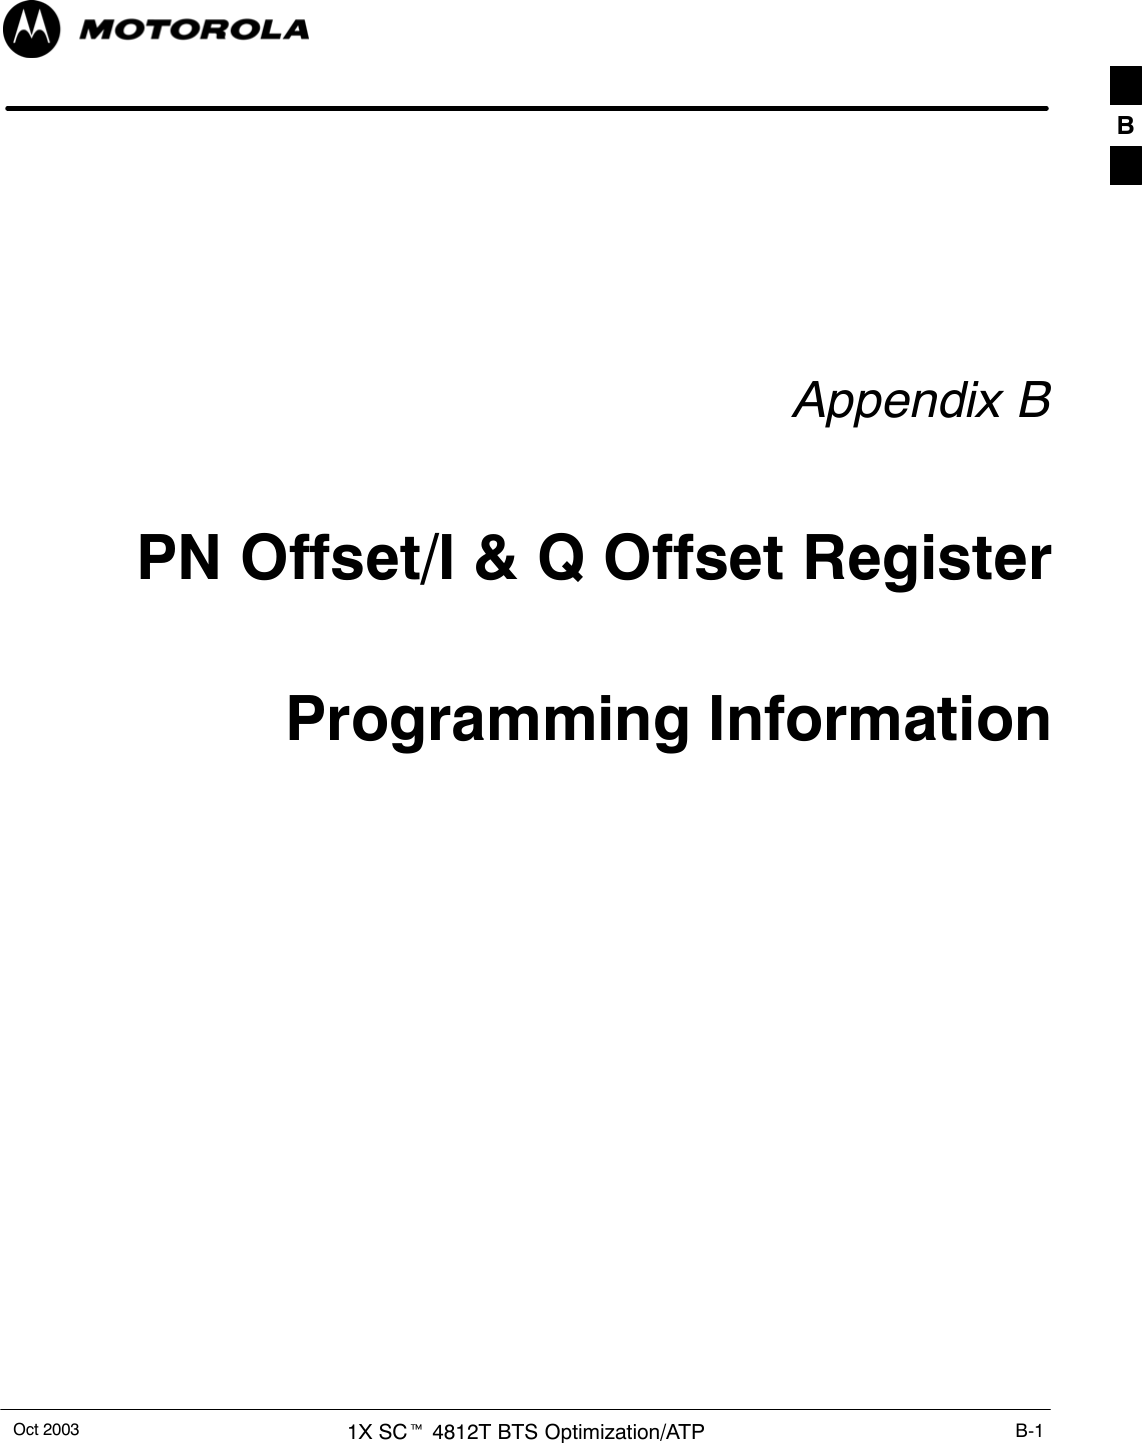 Oct 2003 1X SCt 4812T BTS Optimization/ATP B-1Appendix BPN Offset/I &amp; Q Offset RegisterProgramming InformationB